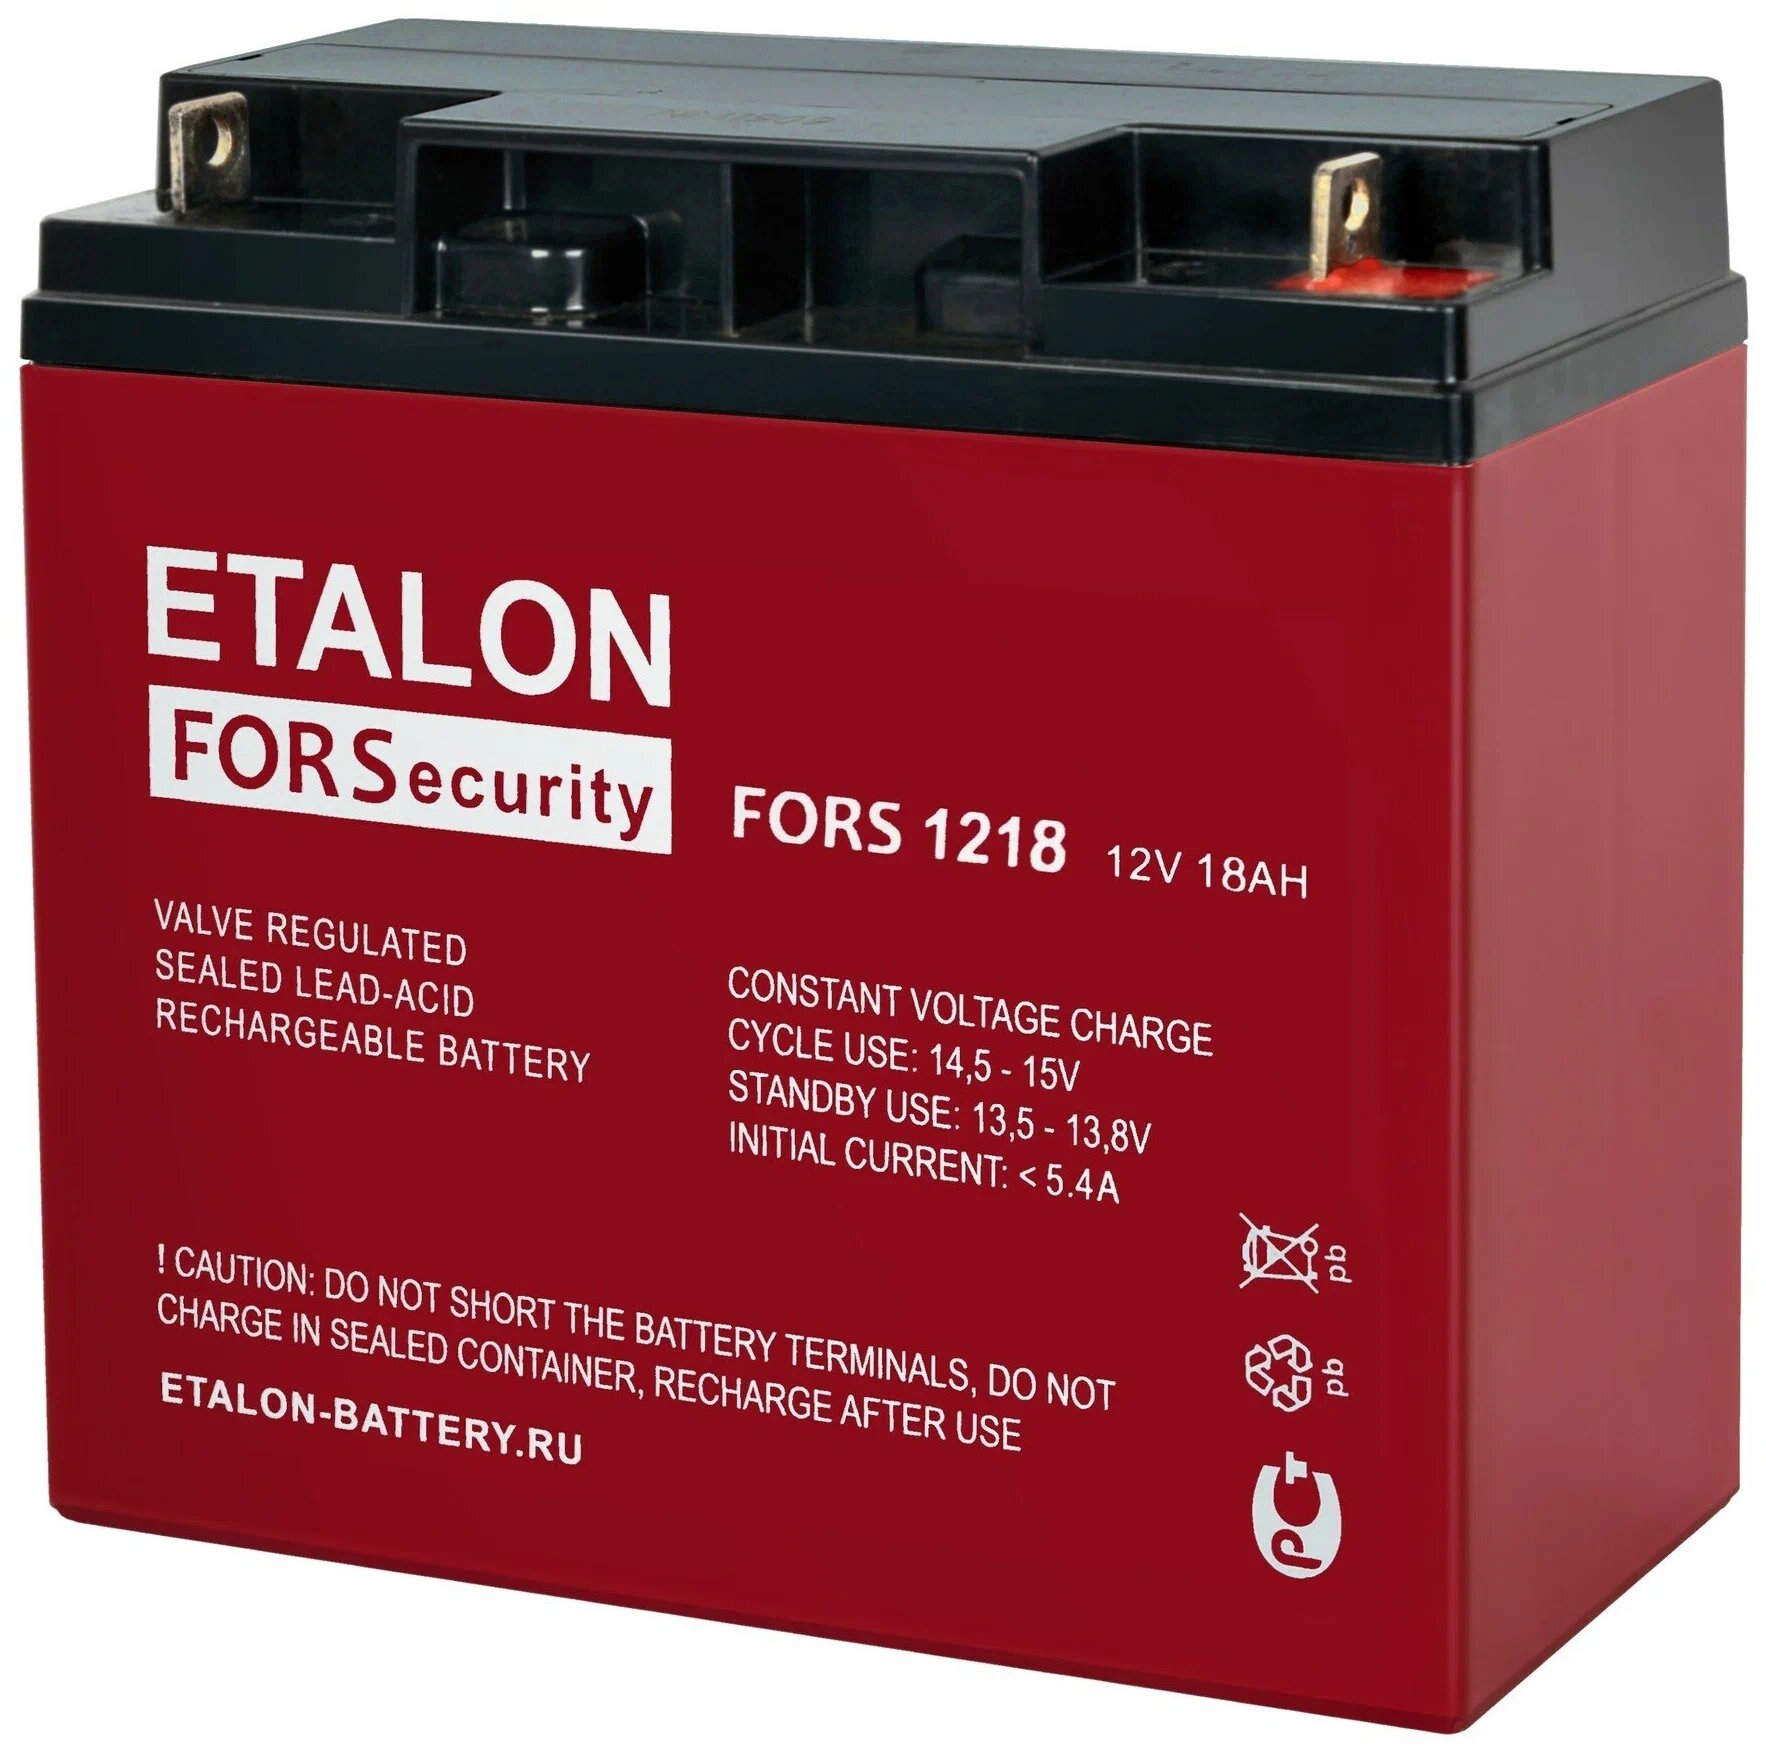 ETALON FORS 1218 Аккумулятор 12 В 18 Ач, габариты 181*77*167 мм.